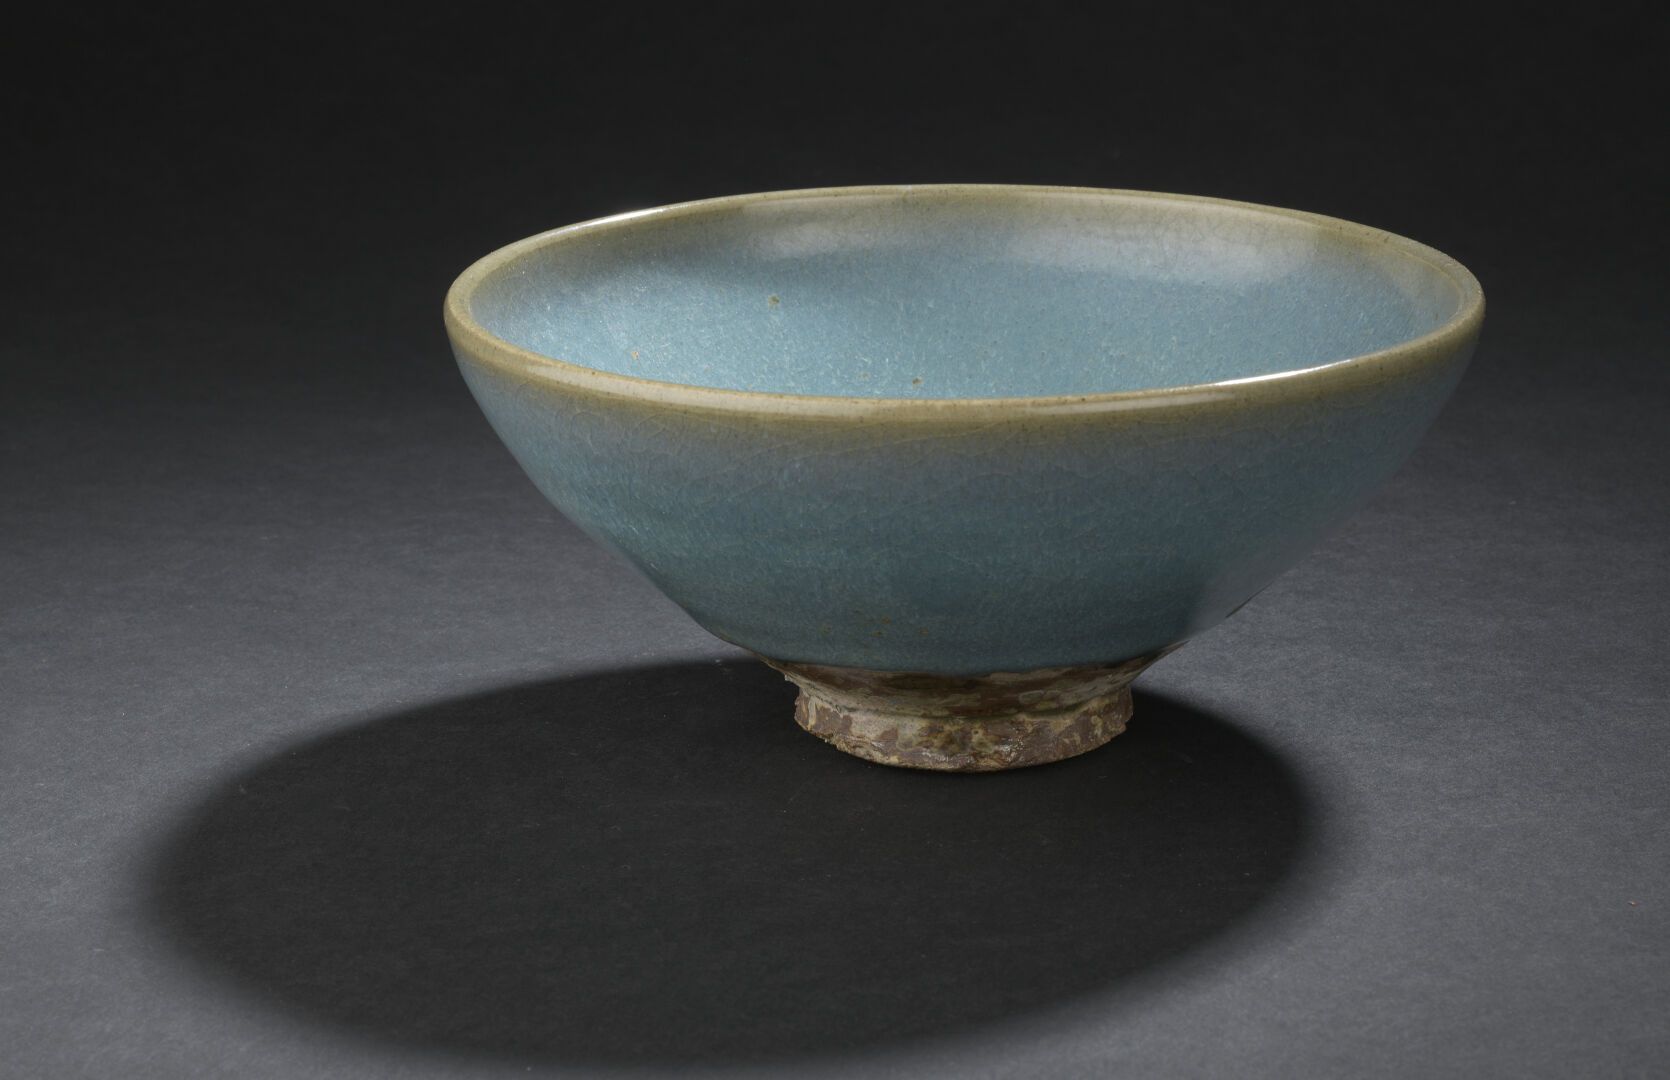 Null 钧窑瓷碗
中国，元/明朝 (1279-1644)
宽大的喇叭口，搁在小脚上。
D. 17,8 cM